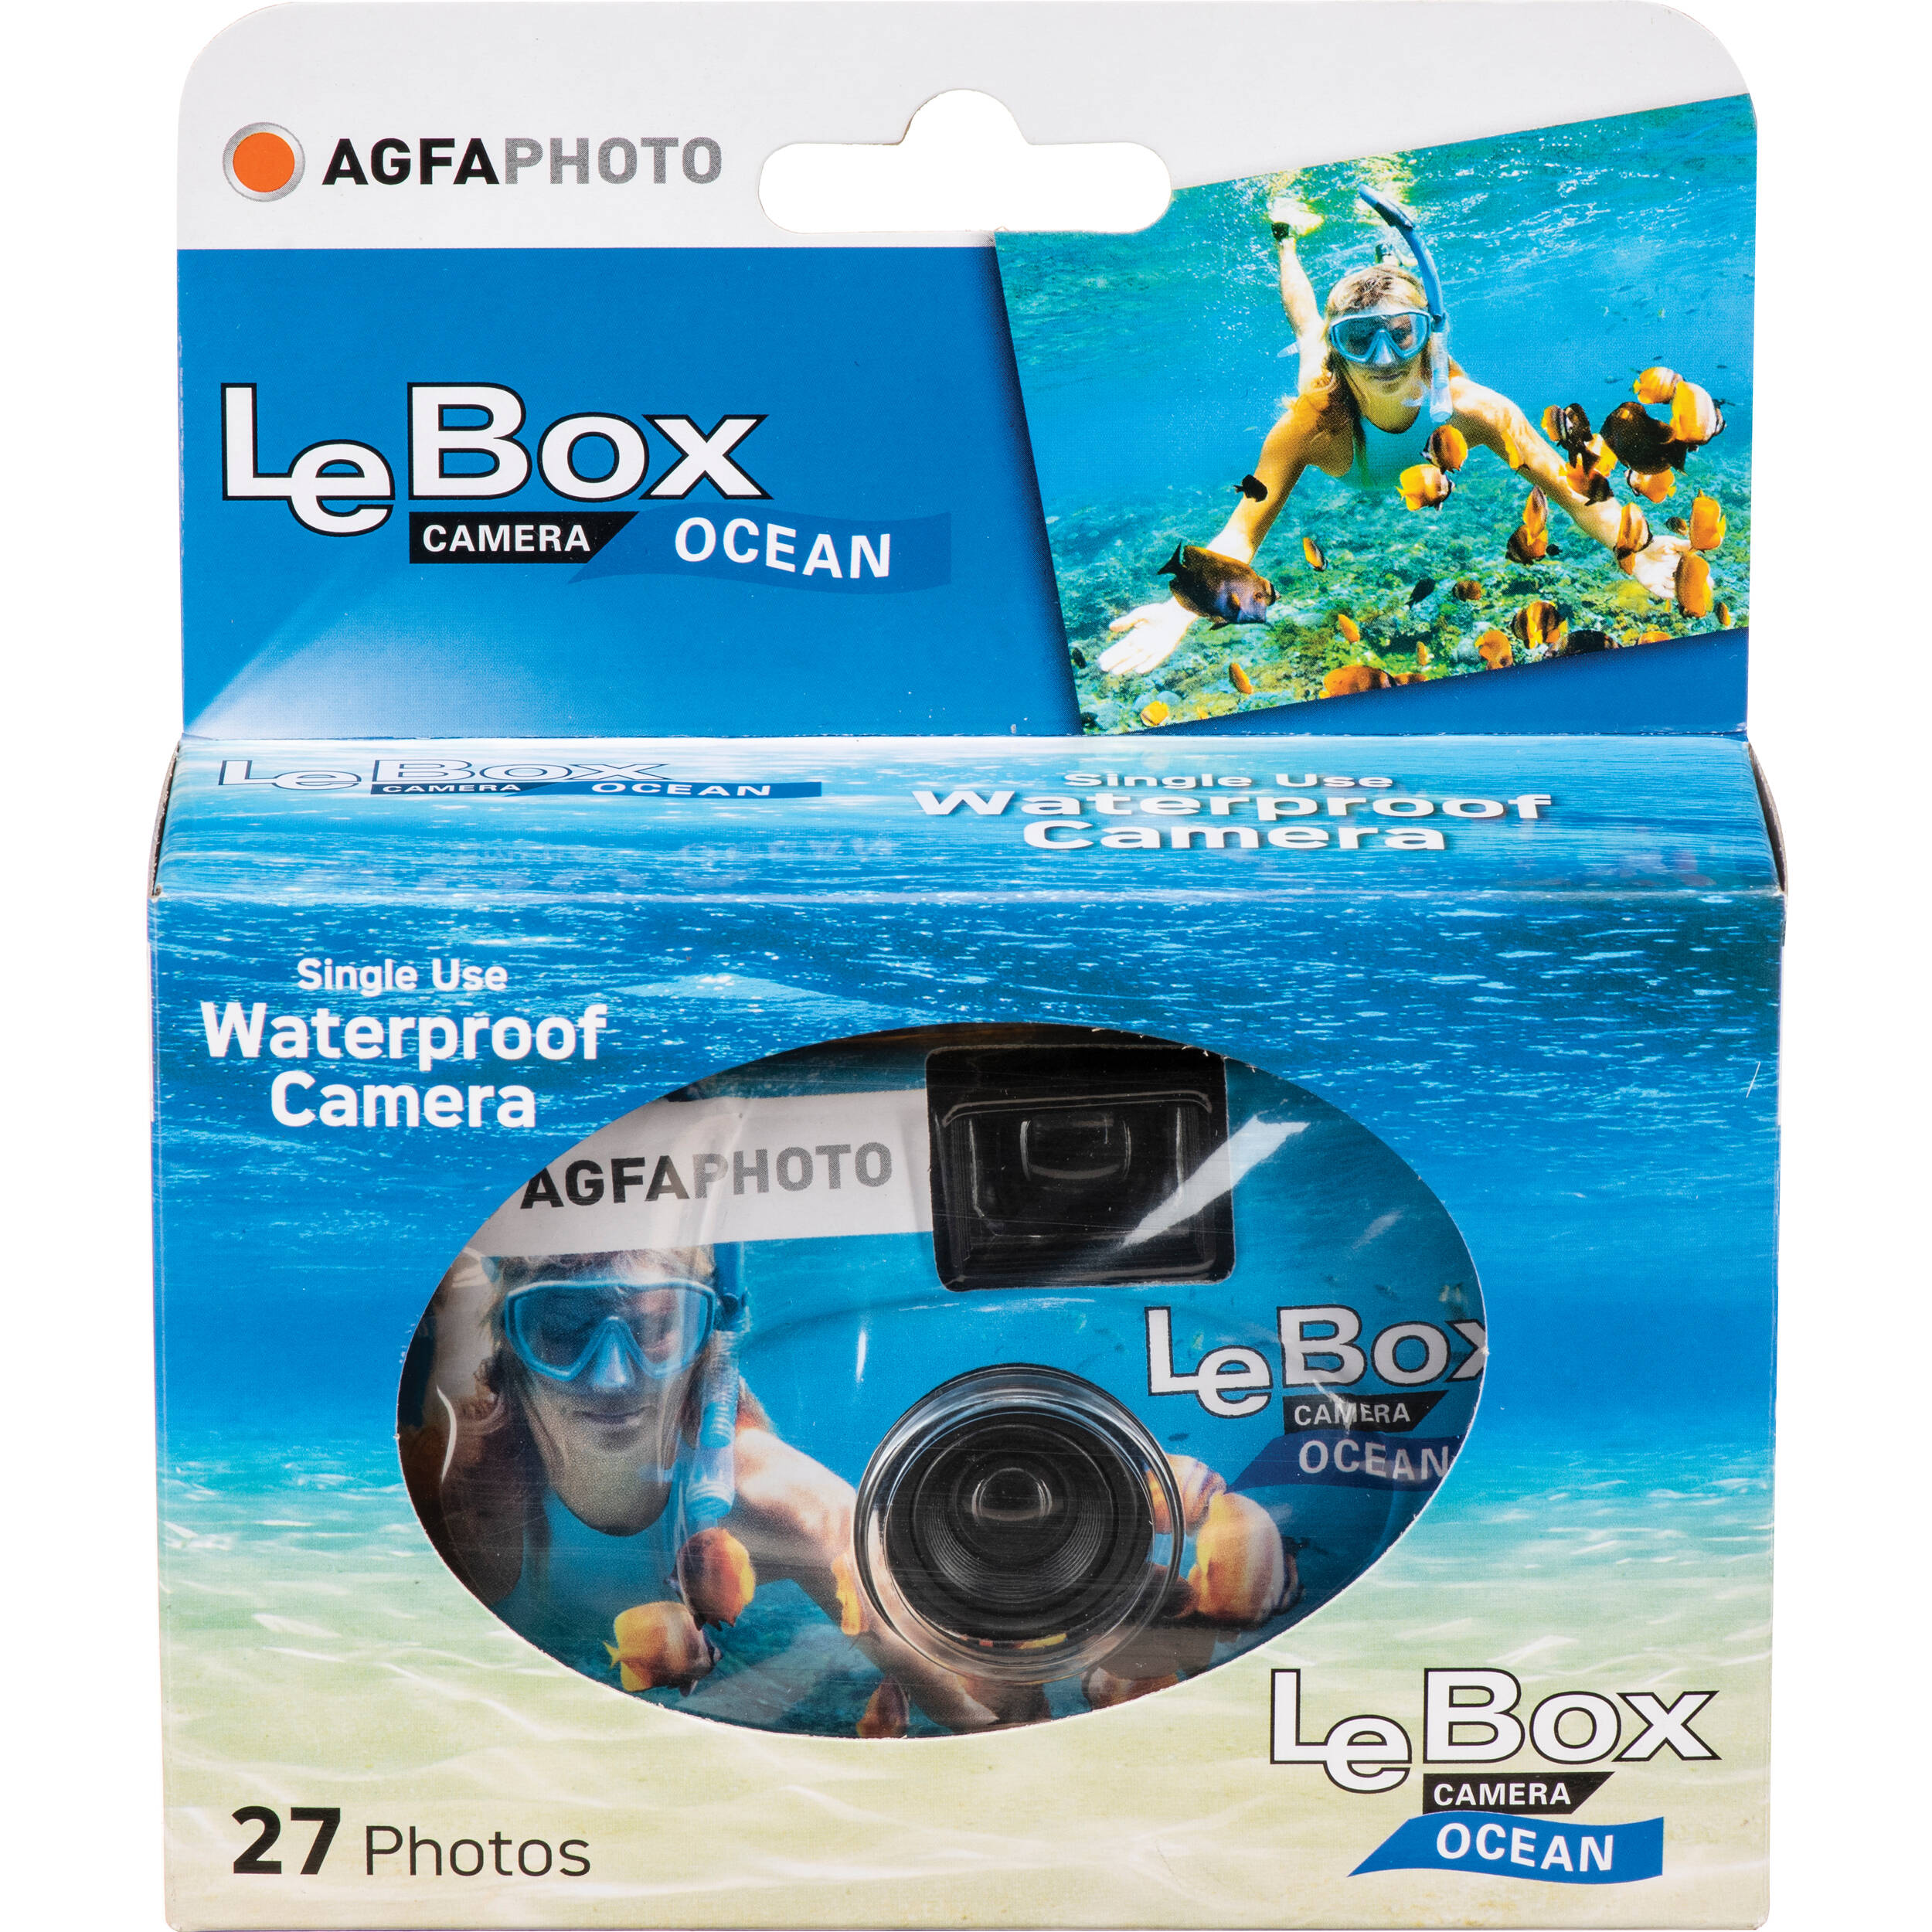   Compact camera AgfaPhoto LeBox Ocean Waterproof Camera Blue